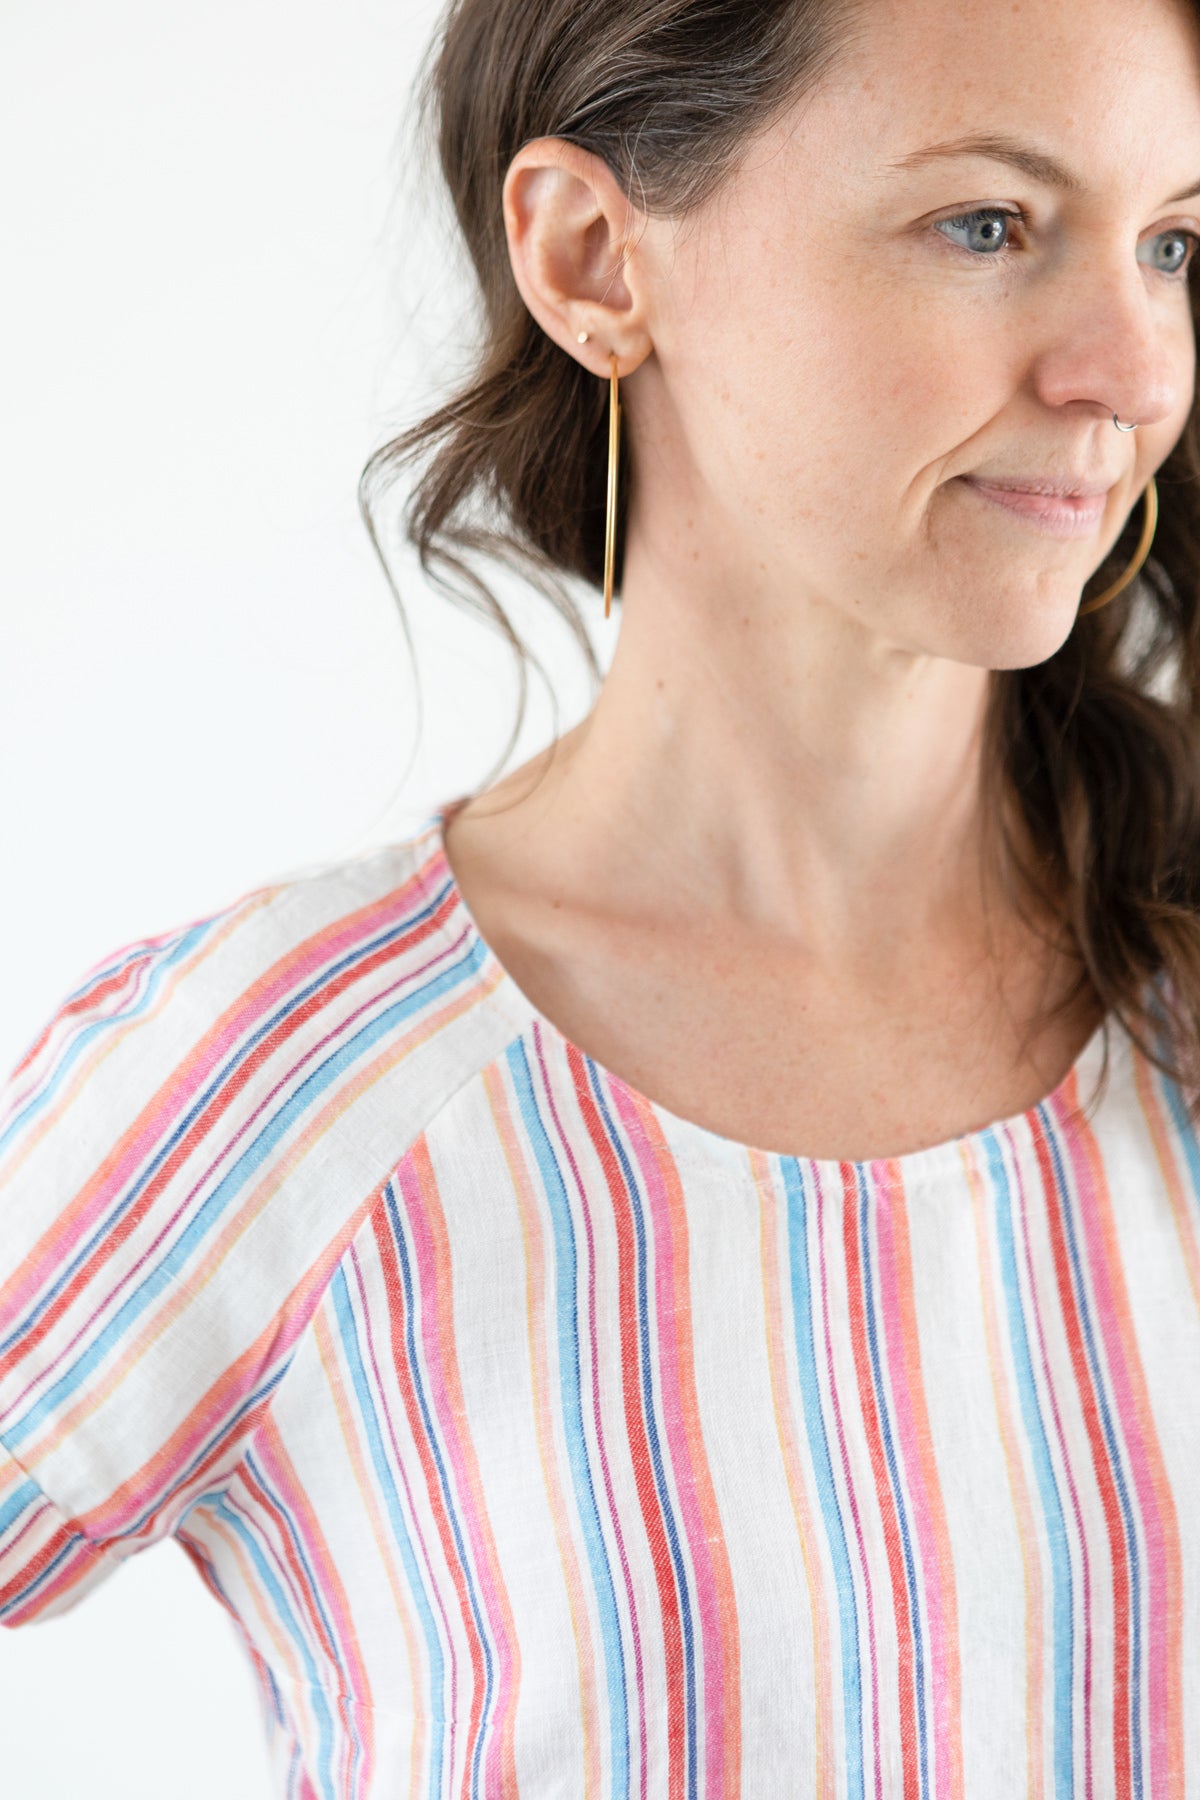 Coram Dress and Top Neckline | Allie Olson Sewing Patterns